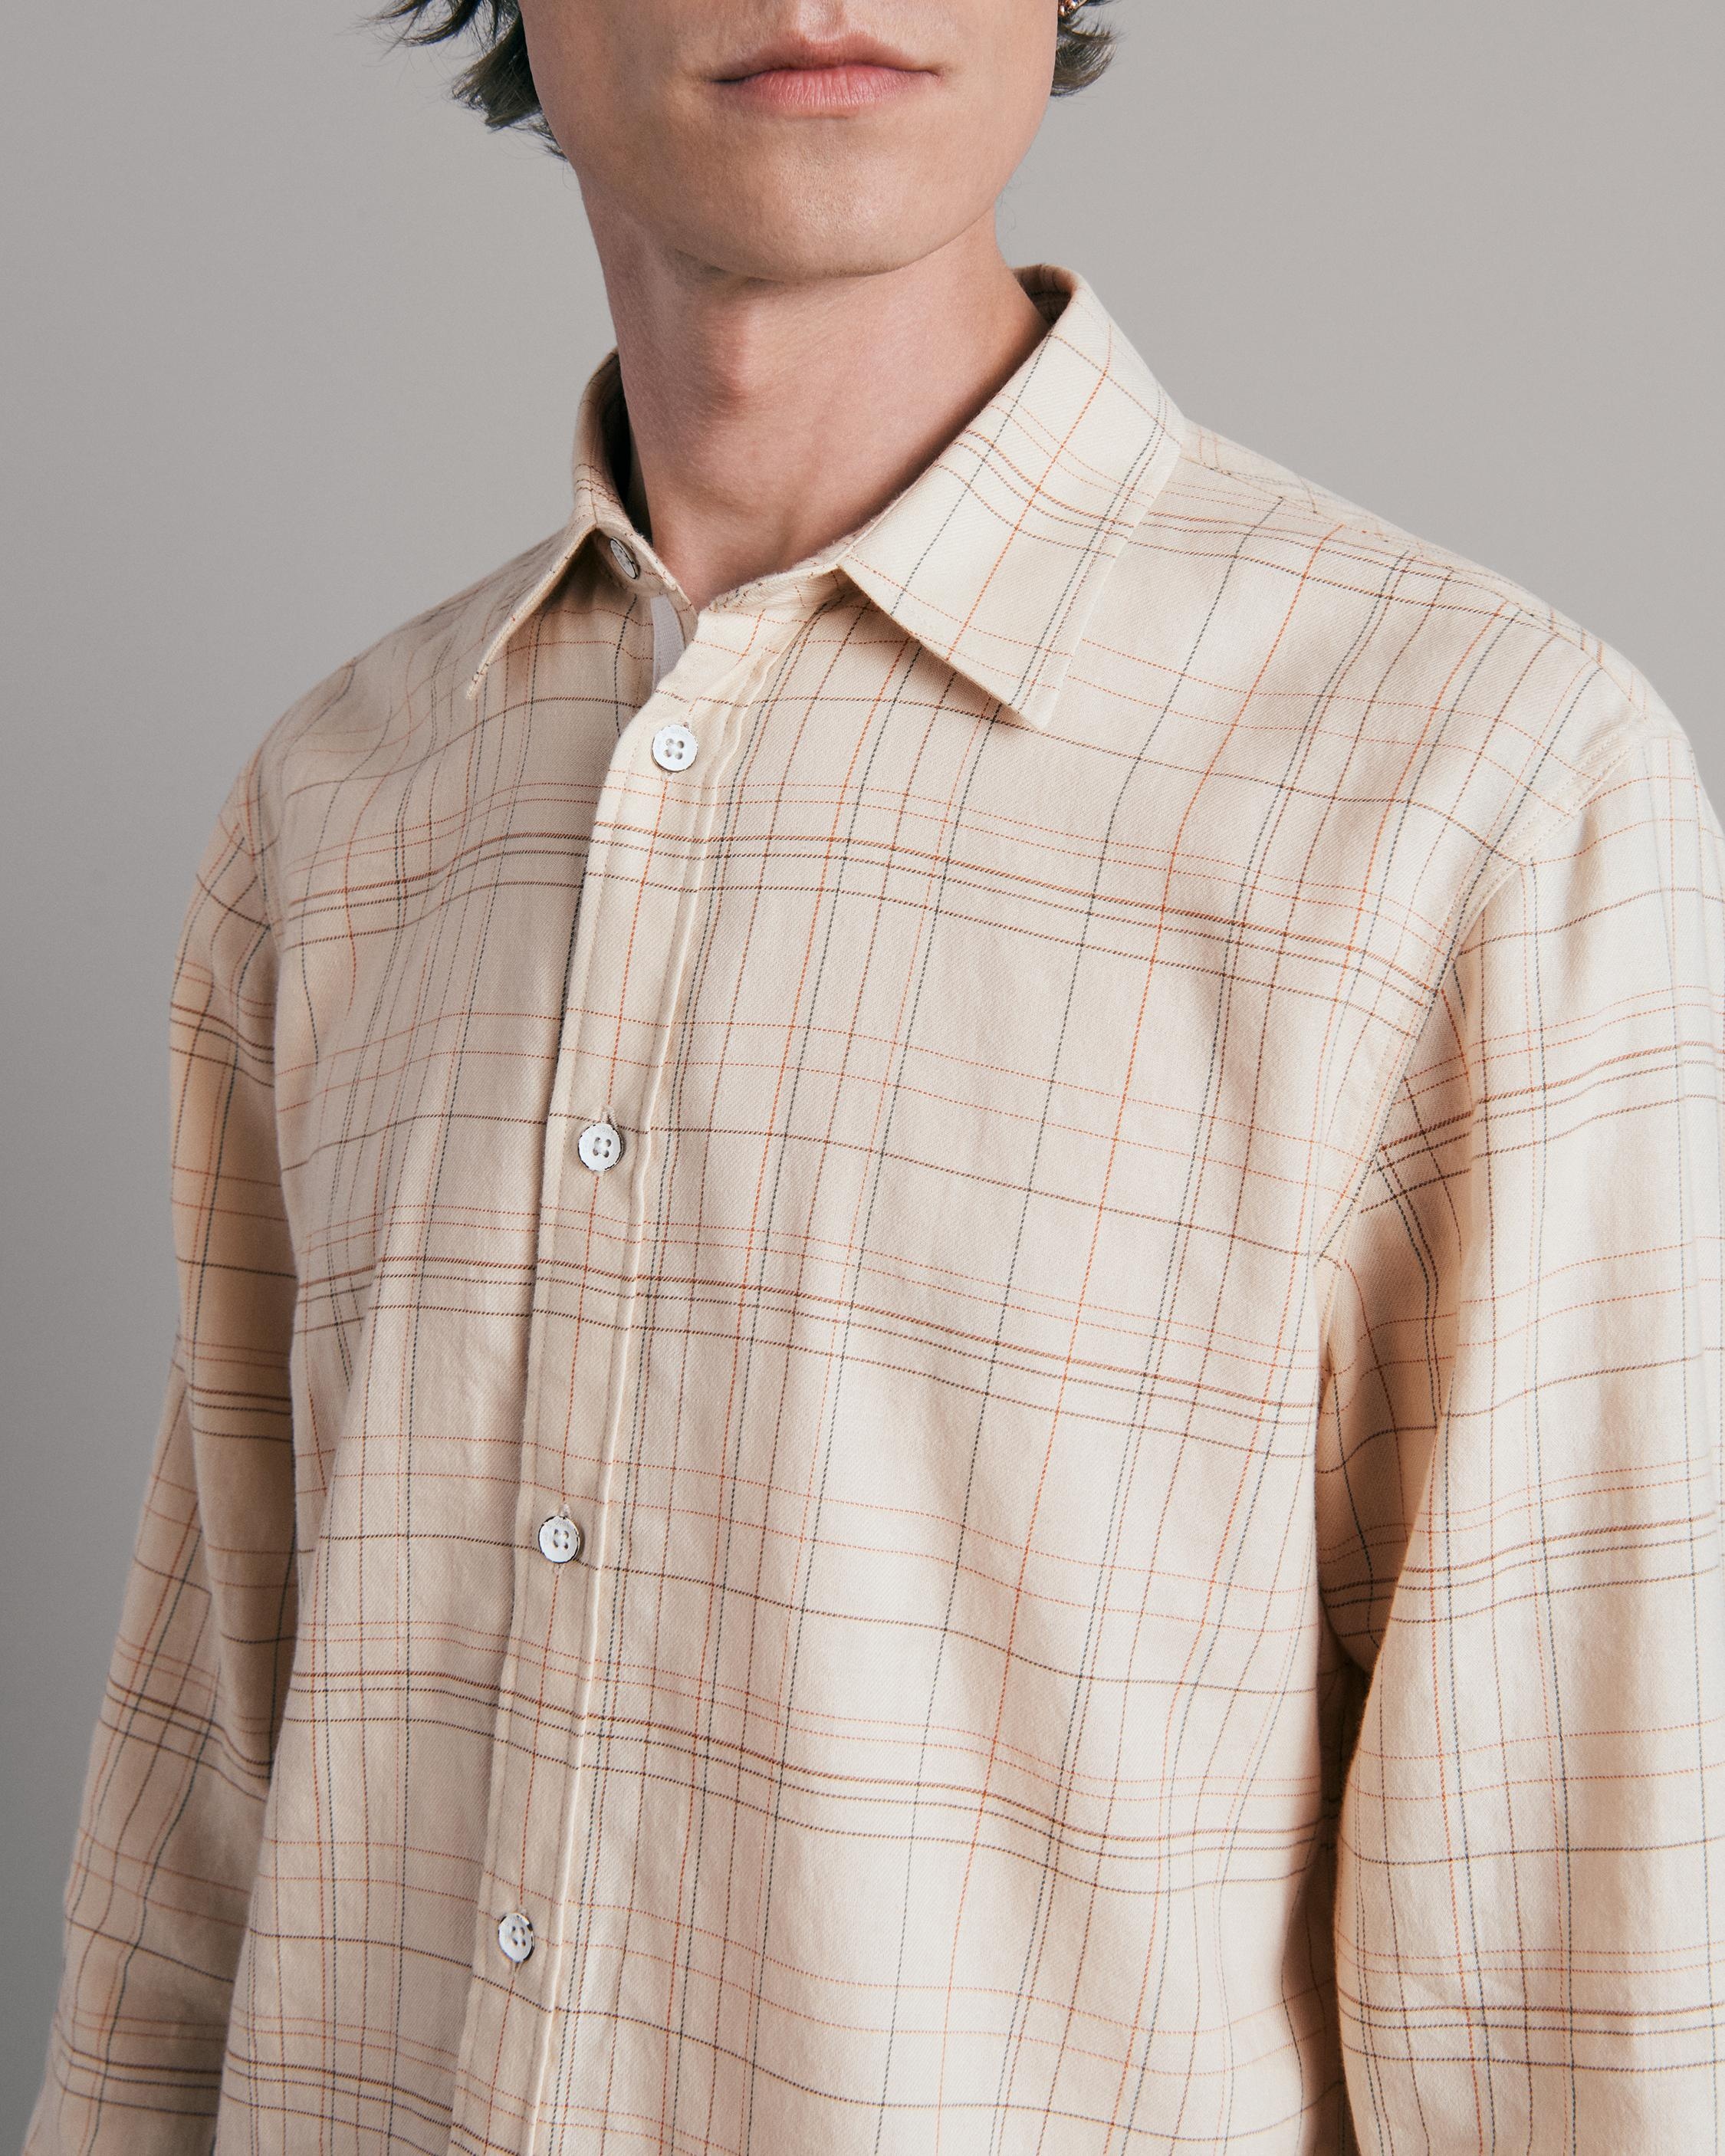 Gus Cotton Shirt
Classic Fit Shirt - 6